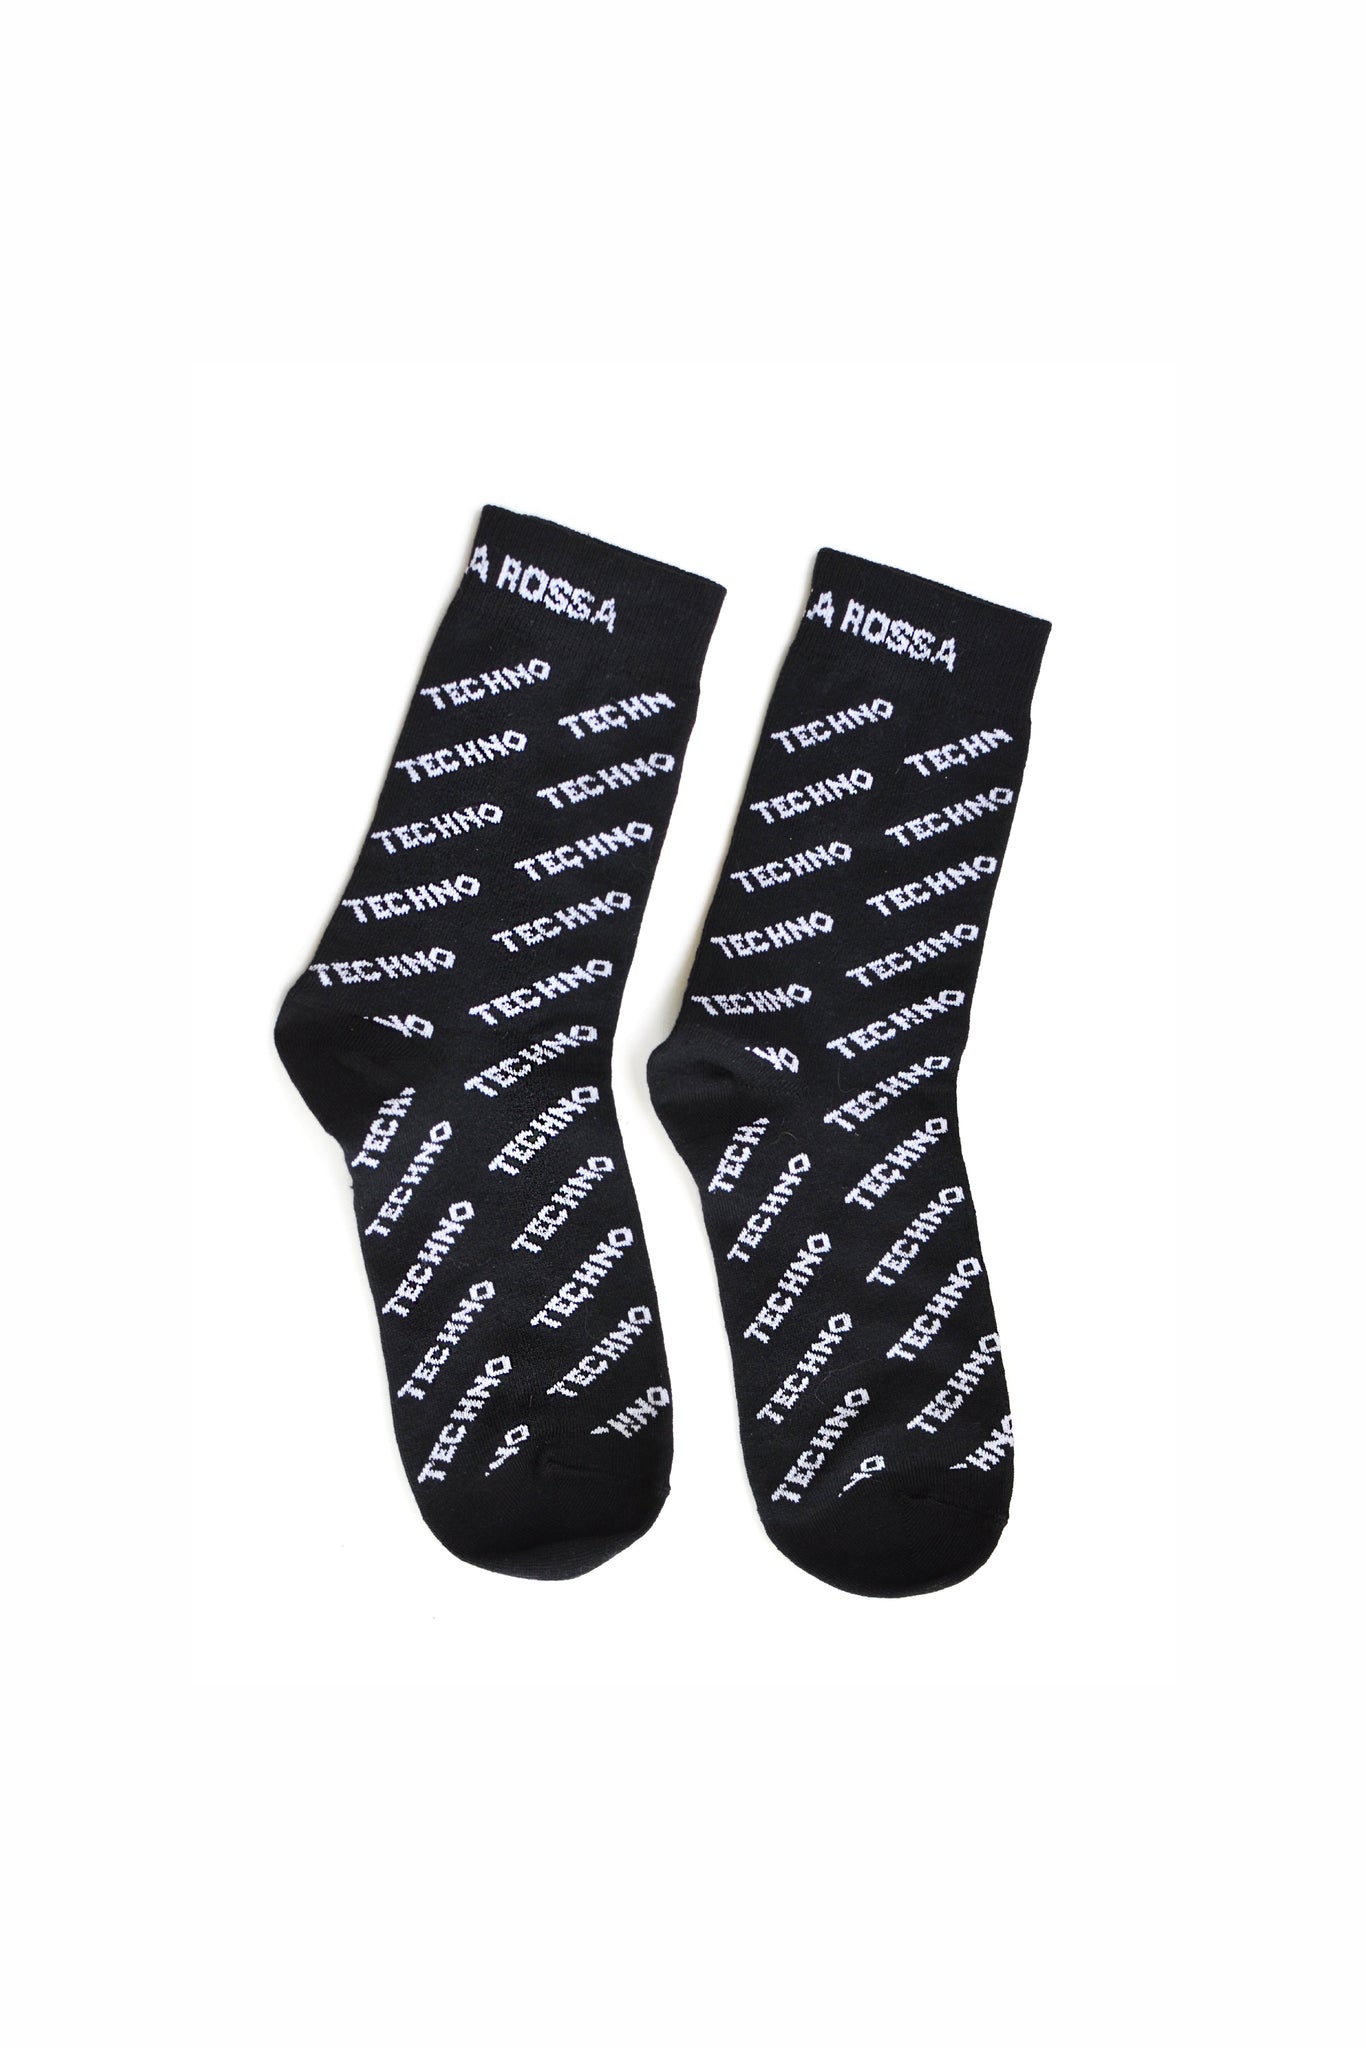 Techno socks